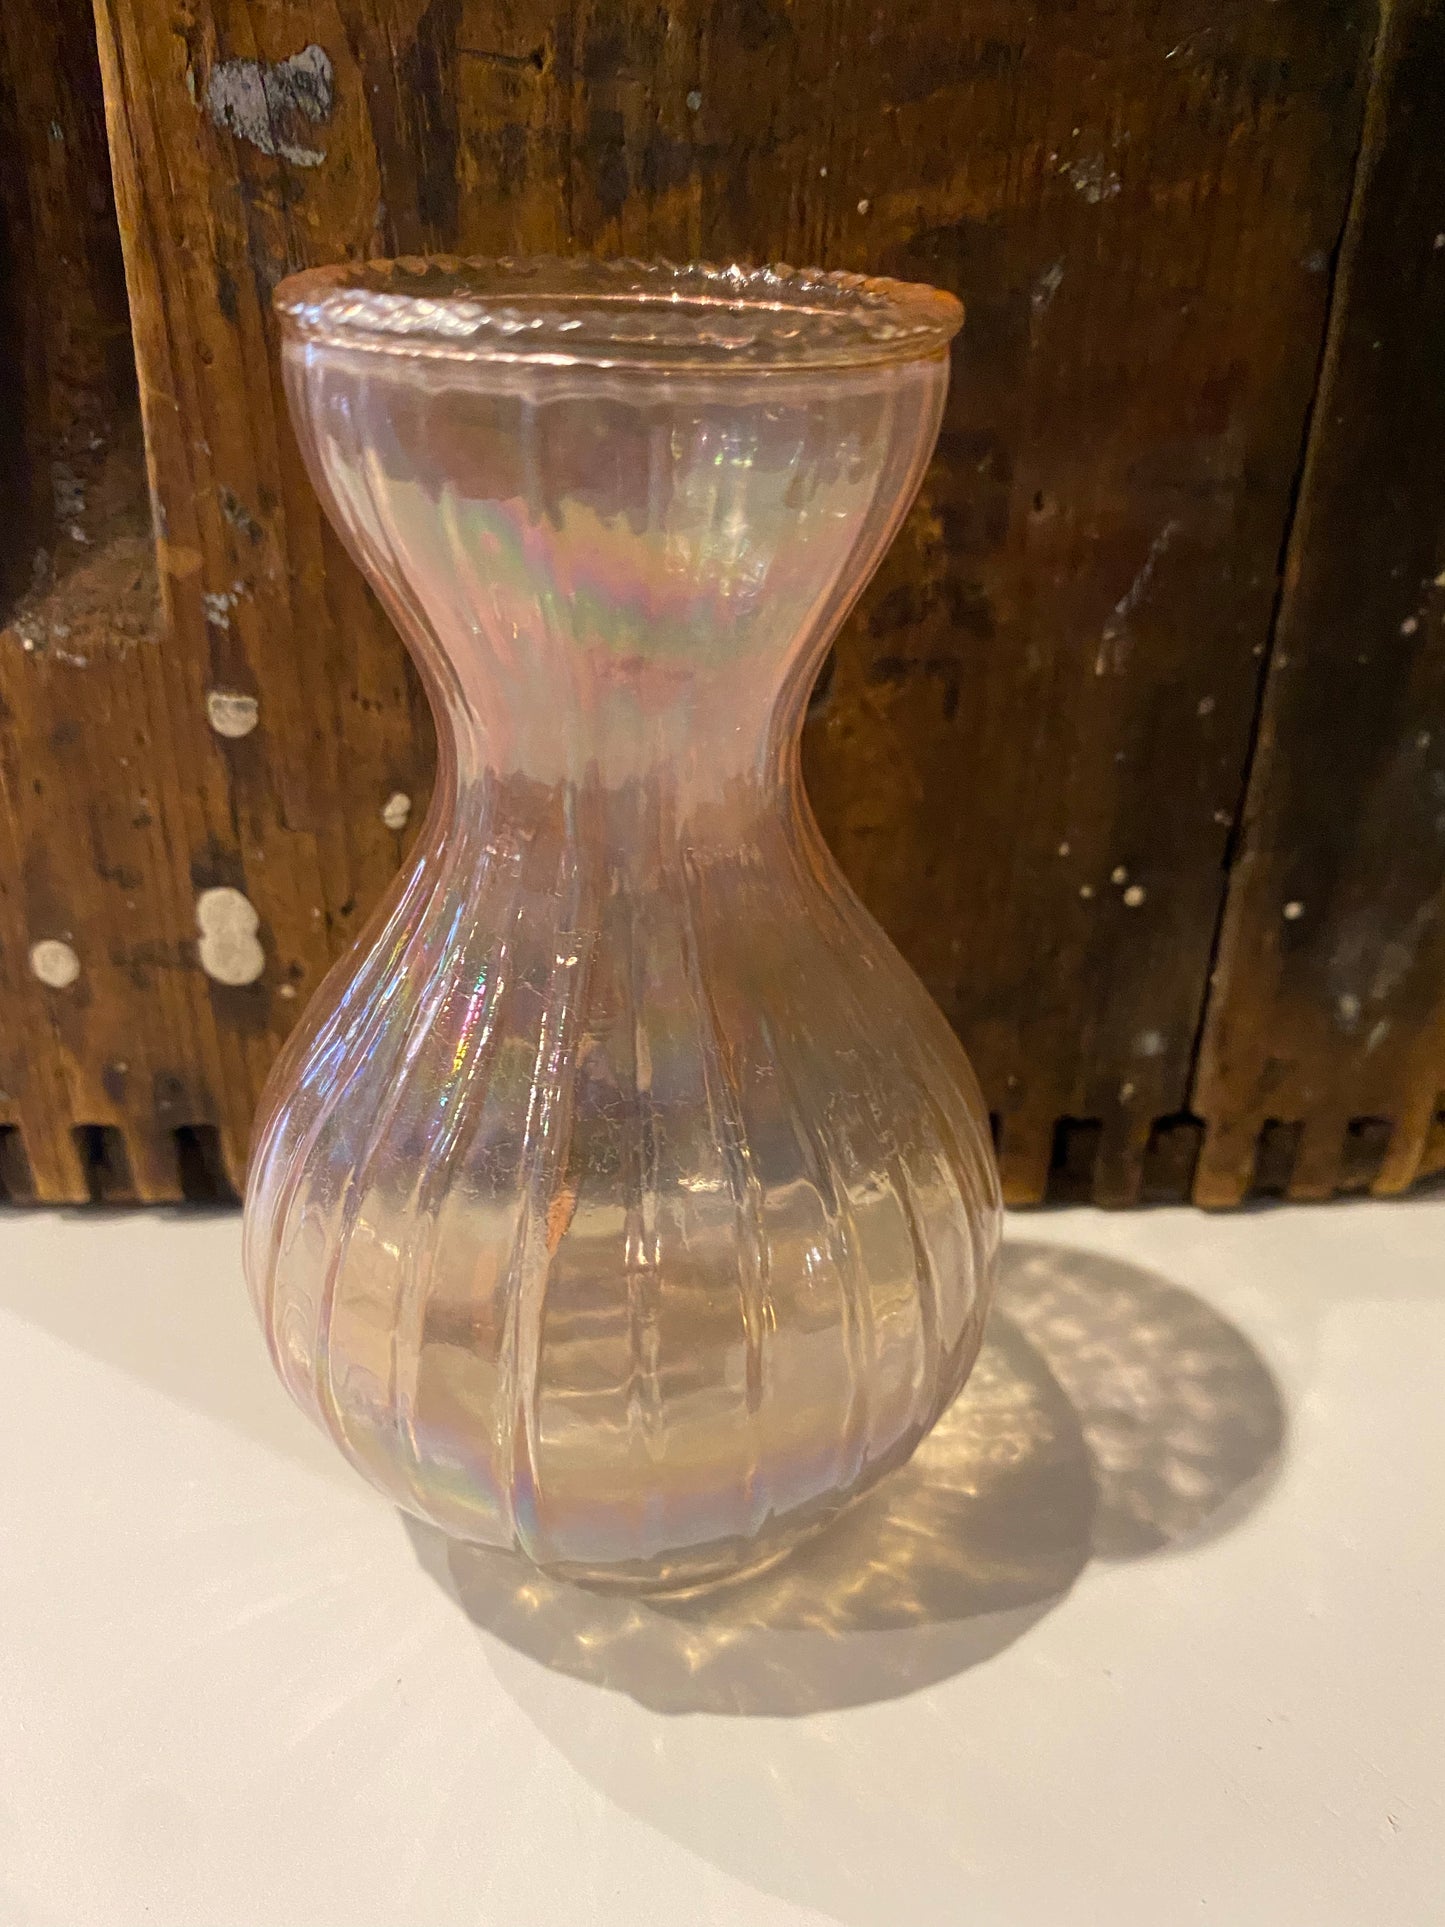 Vintage inspired vases